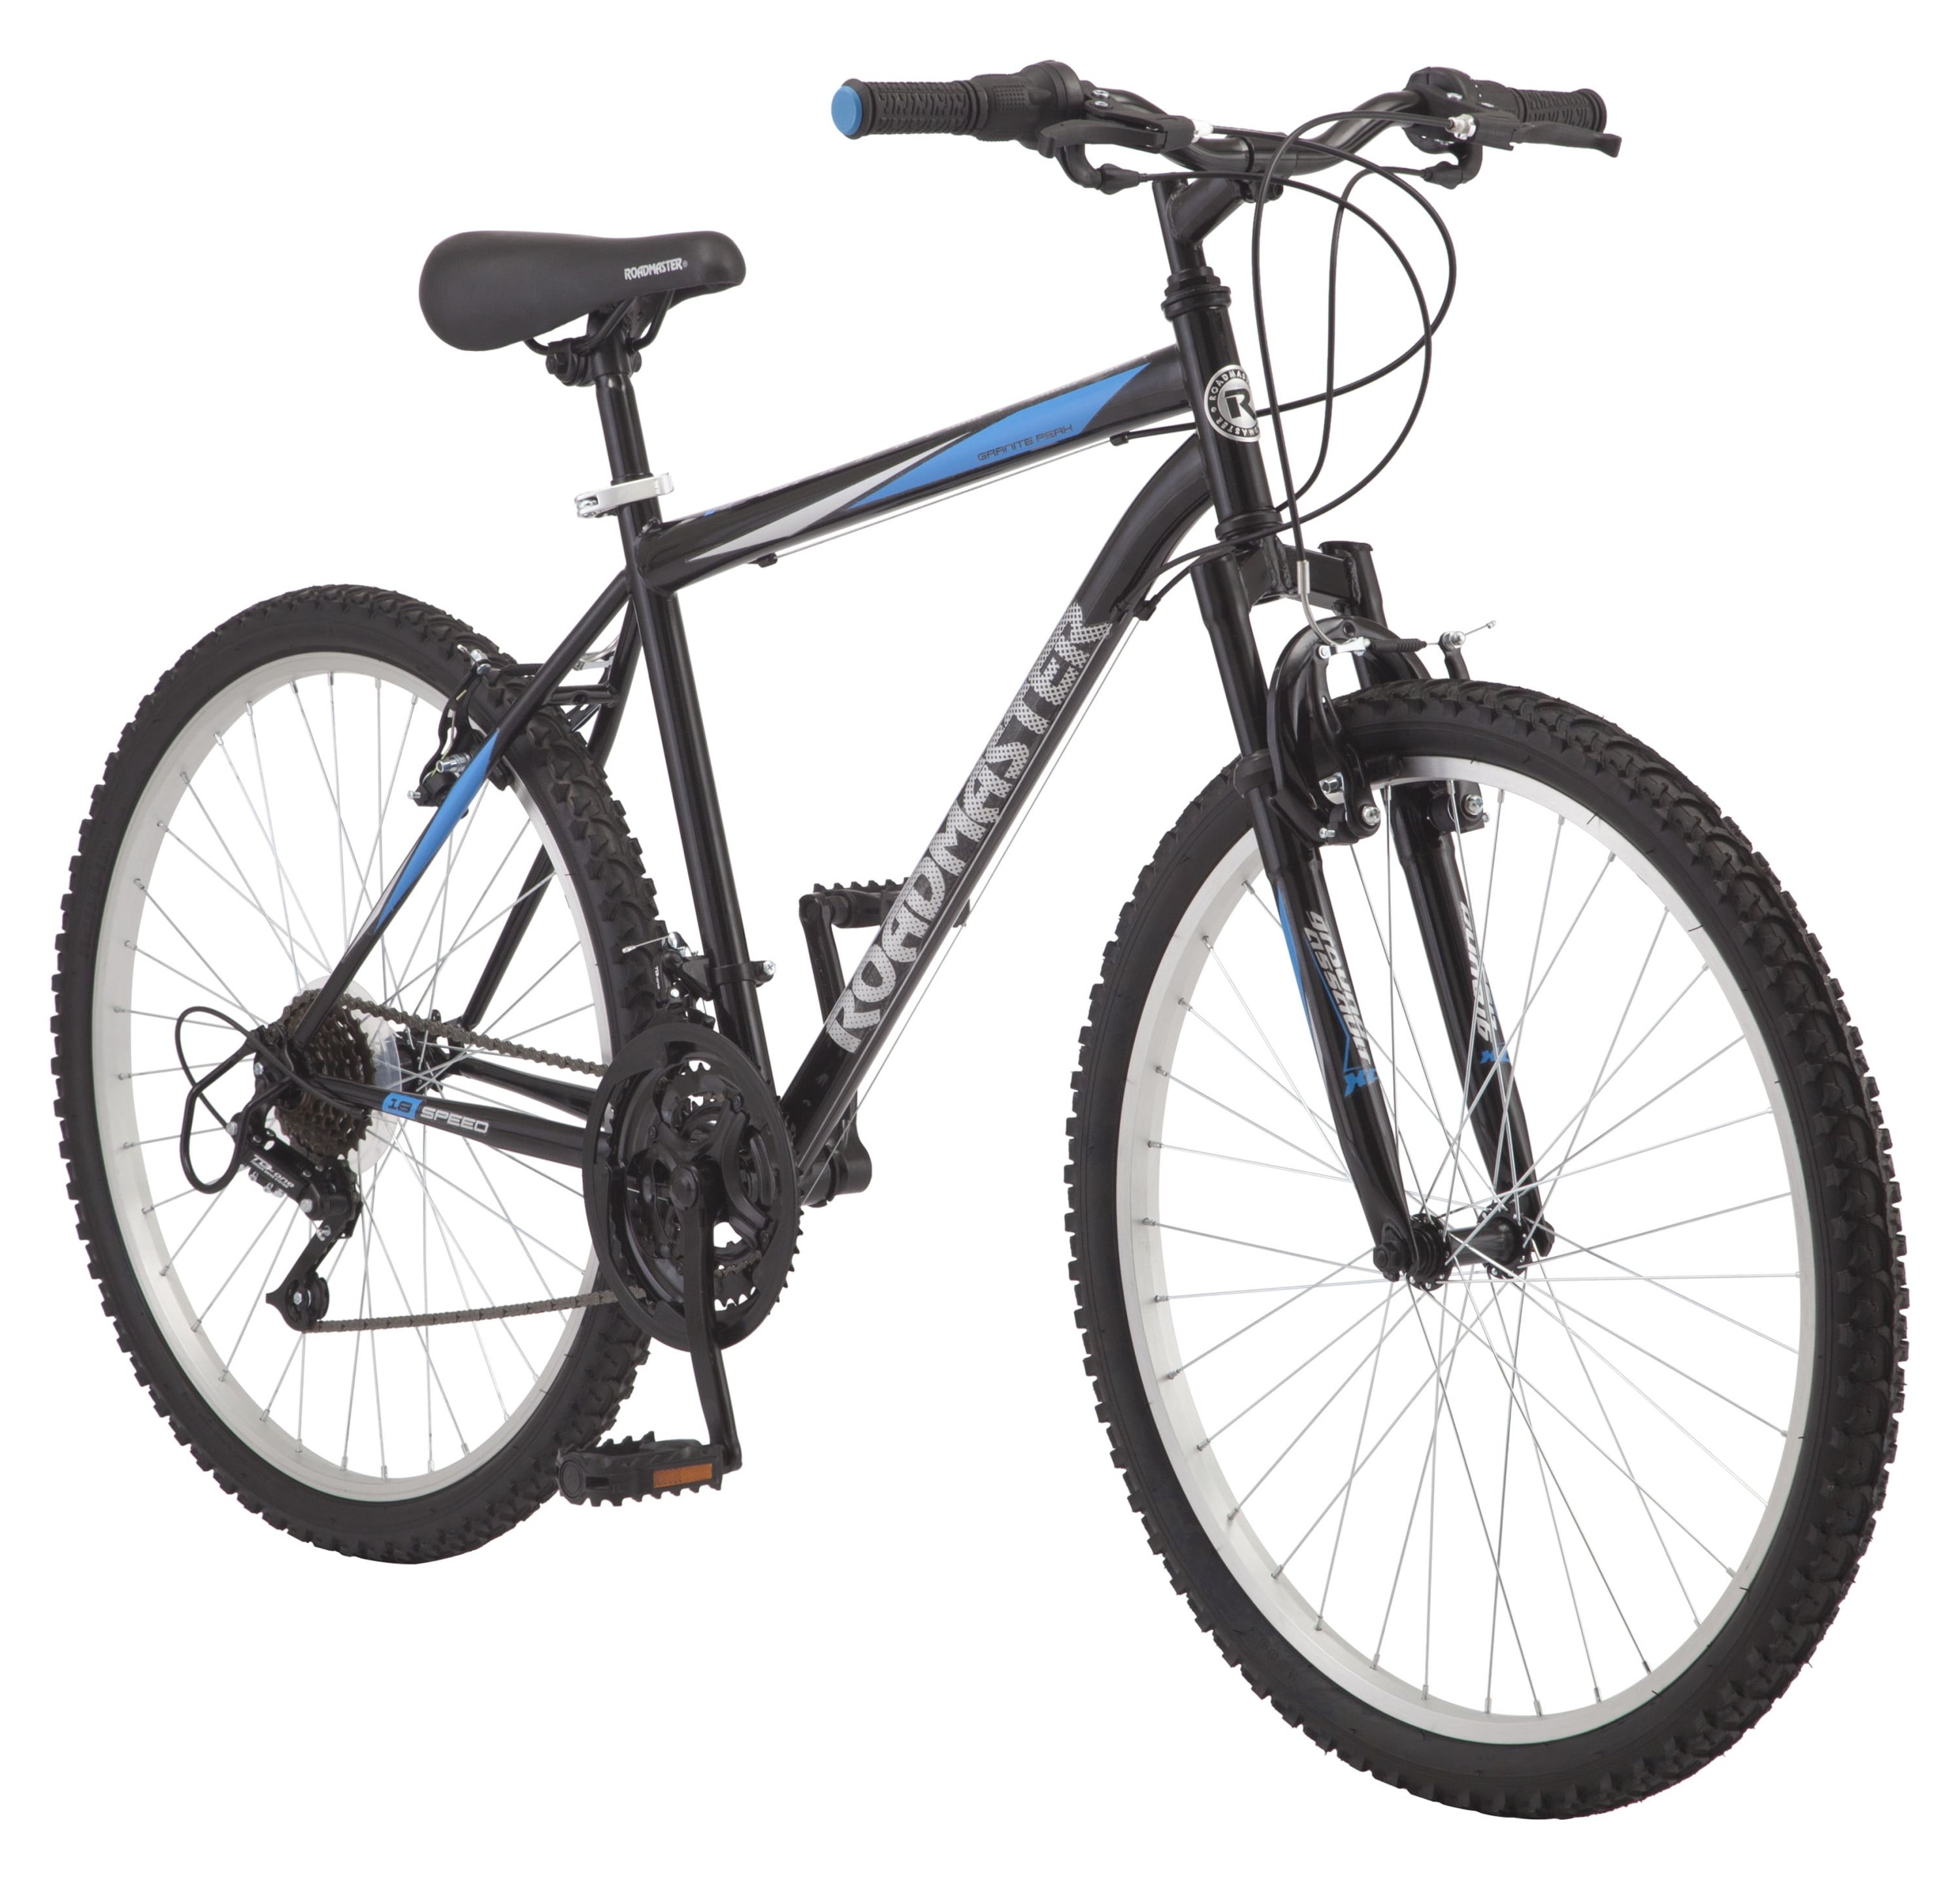 Roadmaster Granite Peak Men's Mountain Bike, 26" wheels, Black/Blue - image 1 of 5